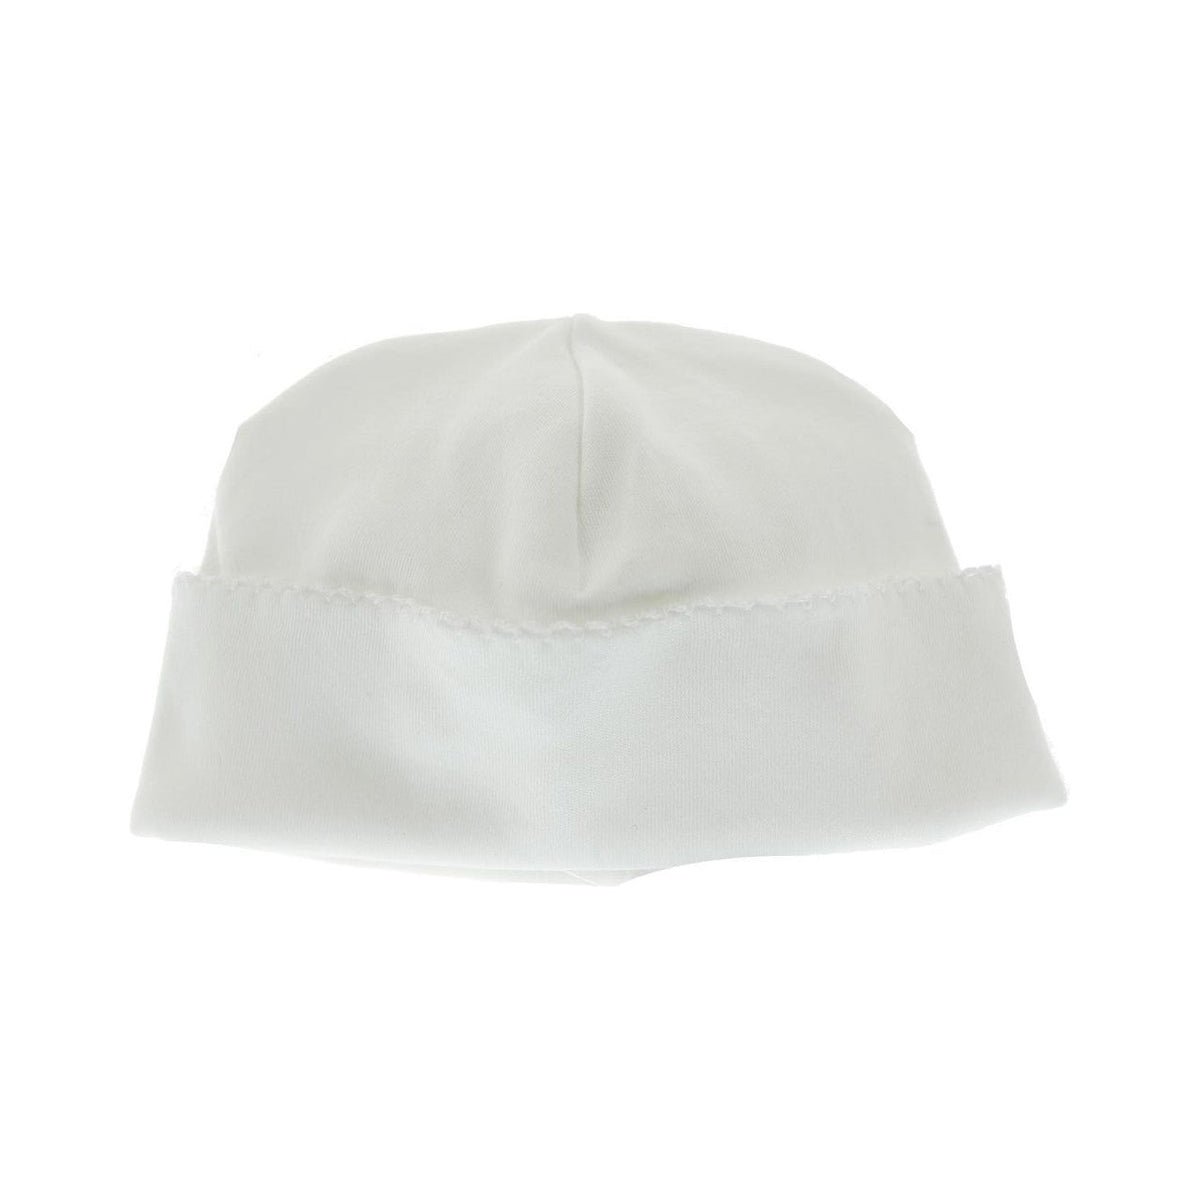 White Unisex Cotton Take Home Beanie Hat